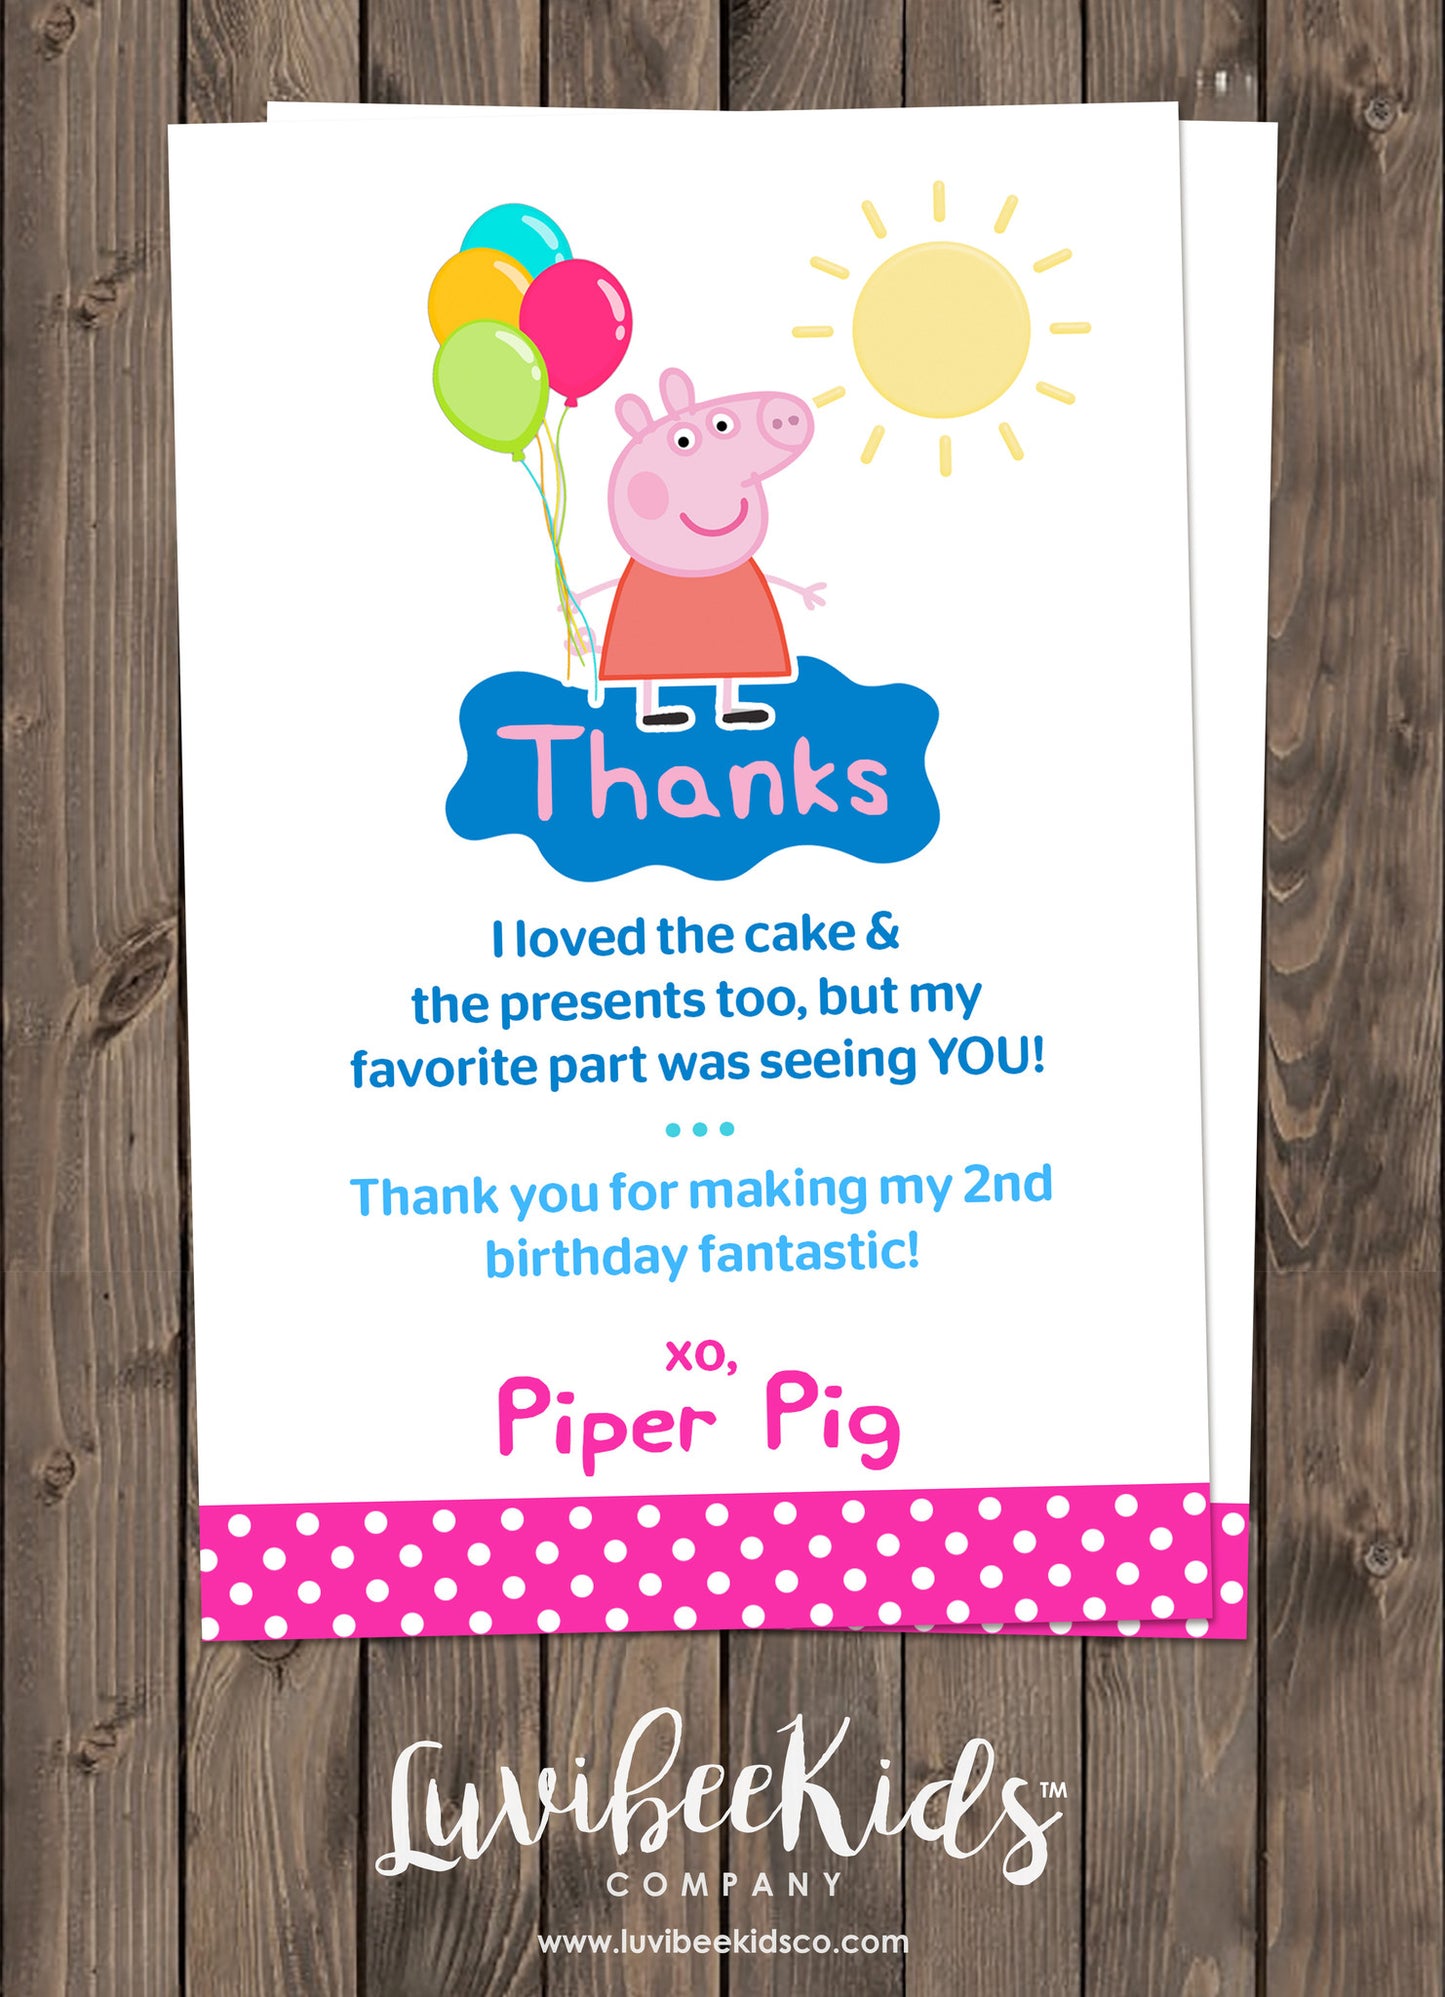 Peppa Pig Birthday Invitation Dots | Free Backside & Thank You Card - LuvibeeKidsCo